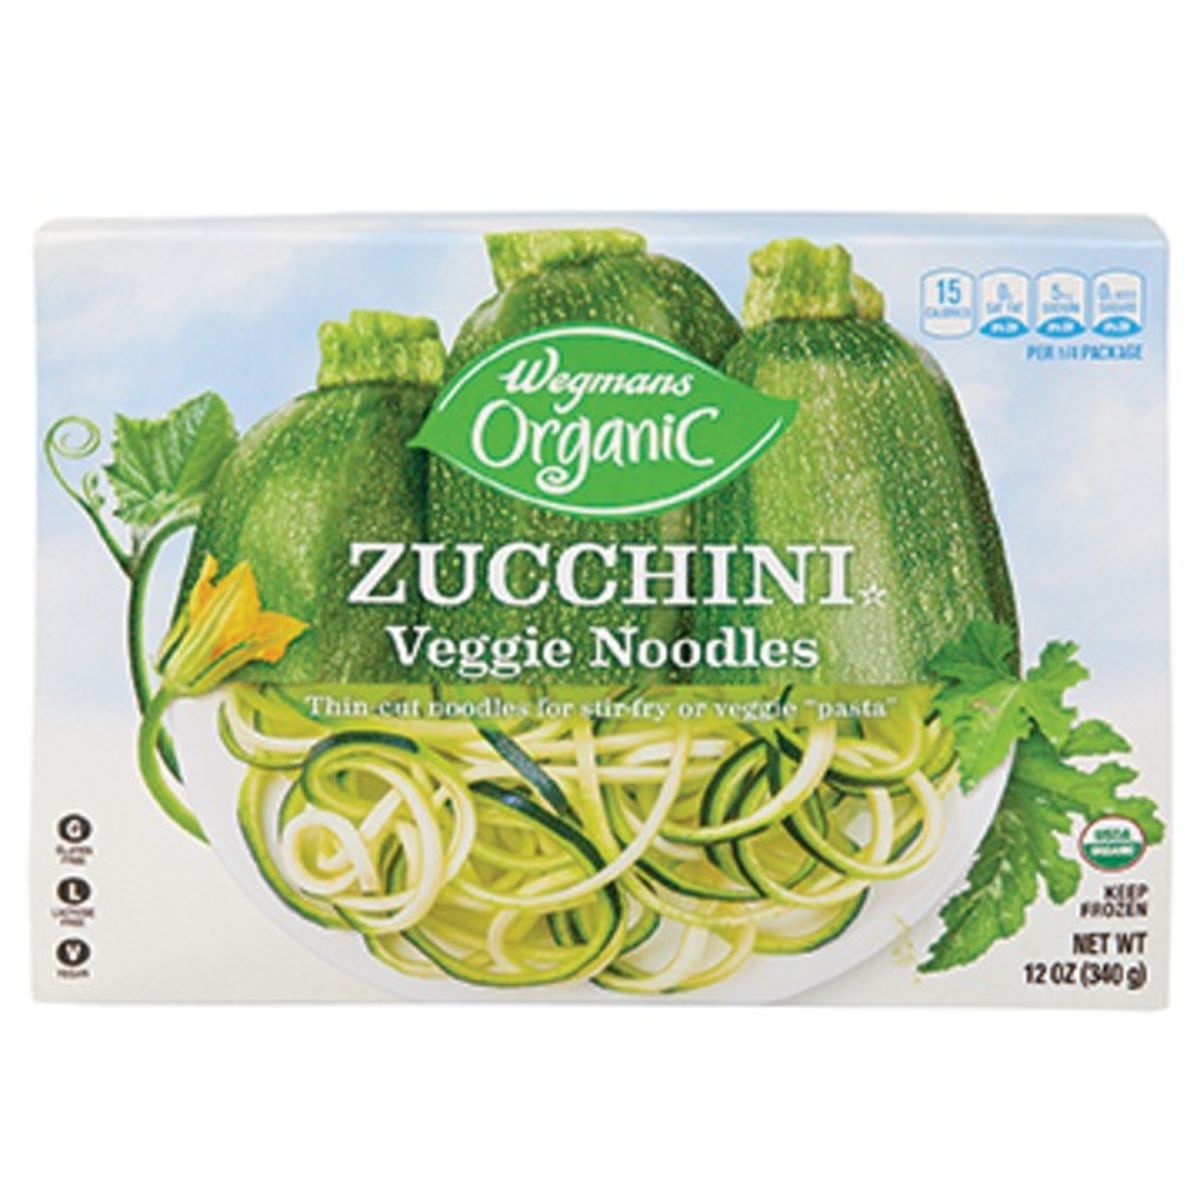 Calories in Wegmans Organic Zucchini Veggie Noodles